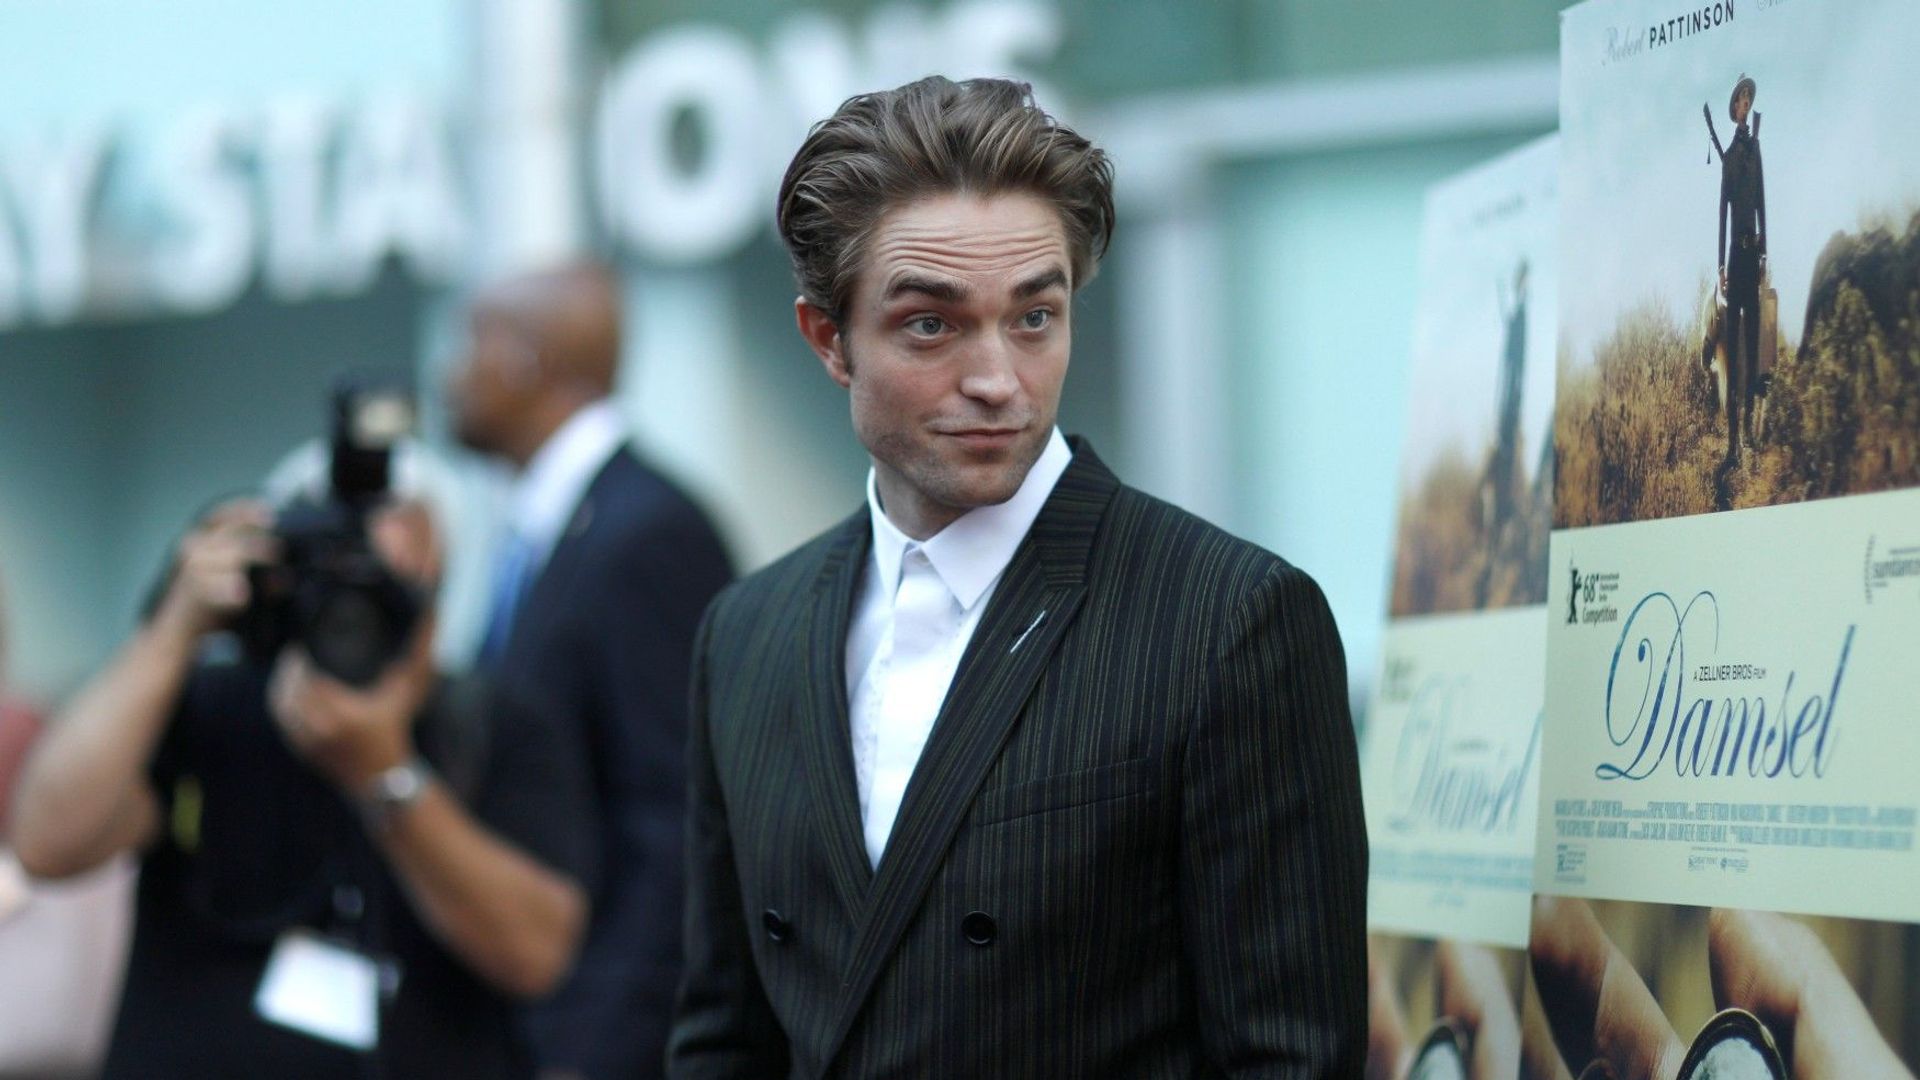 Pattinson on ‘Damsel’ premiere